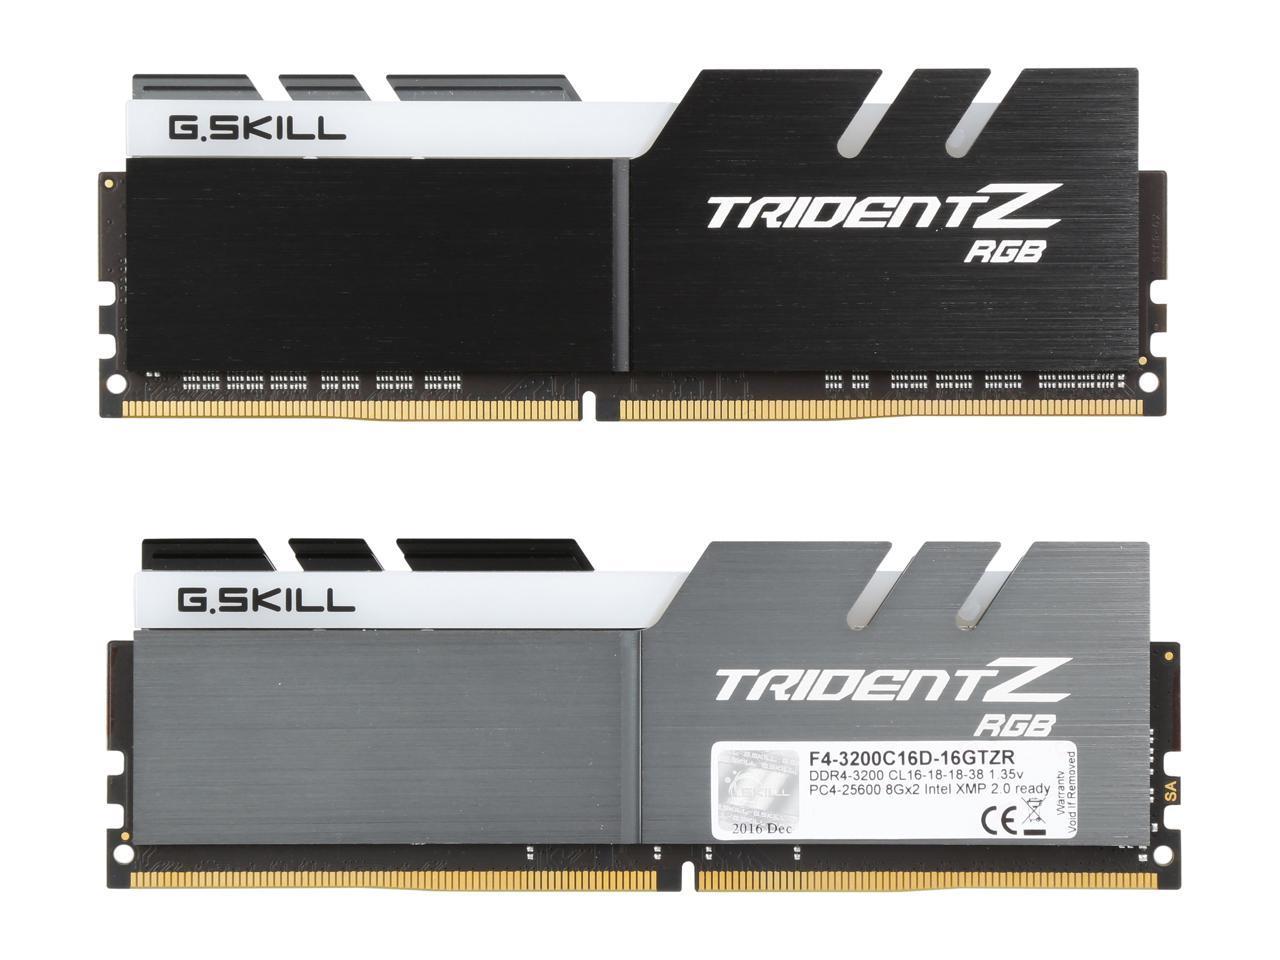 G-SKILL TRIDENT Z RGB SERIES DDR4 3200MHZ 2*8GB